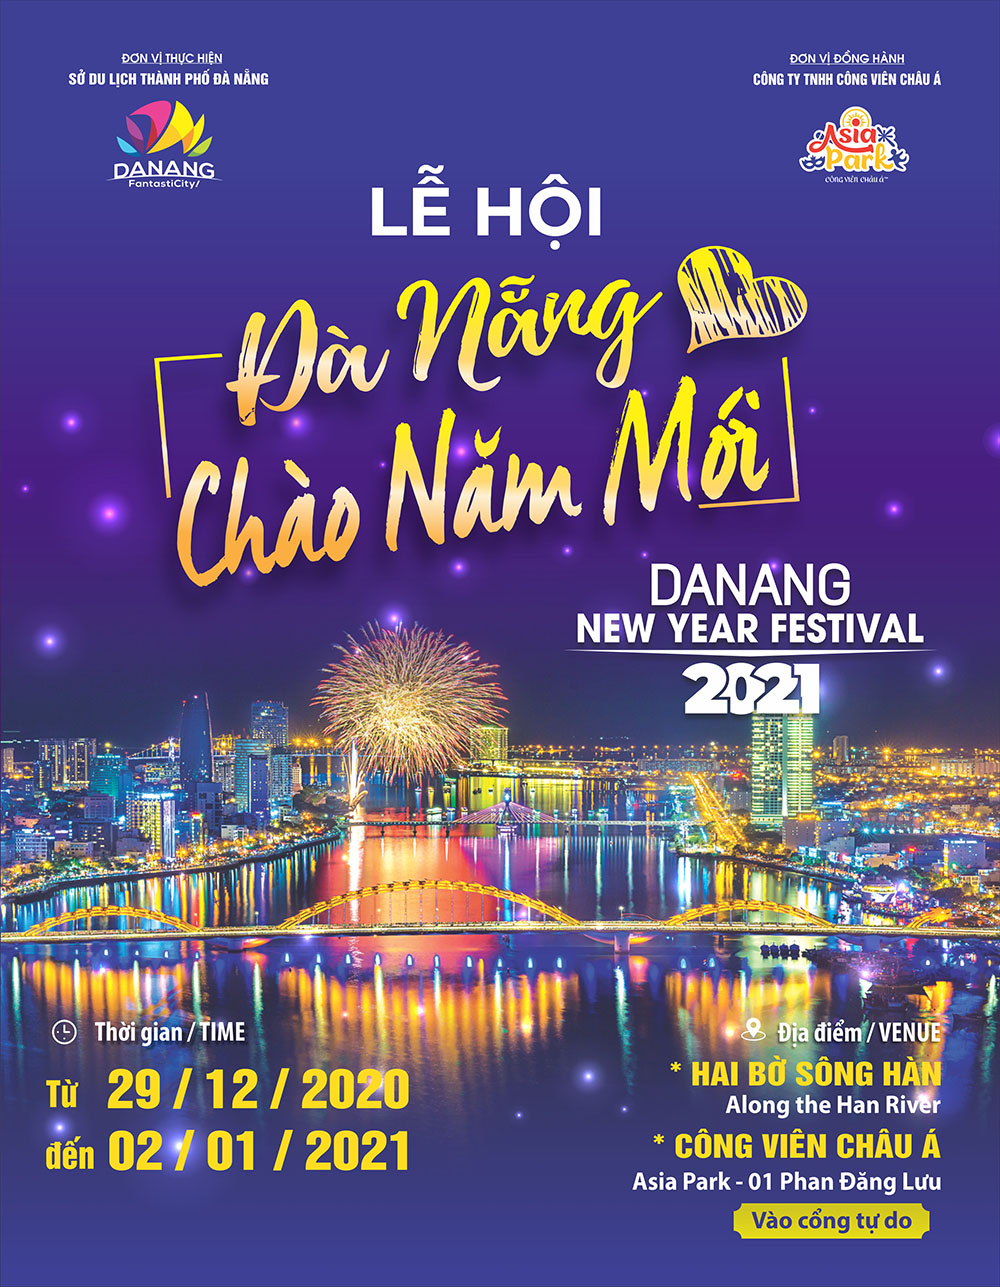 Le Hoi Da Nang Chao Nam Moi